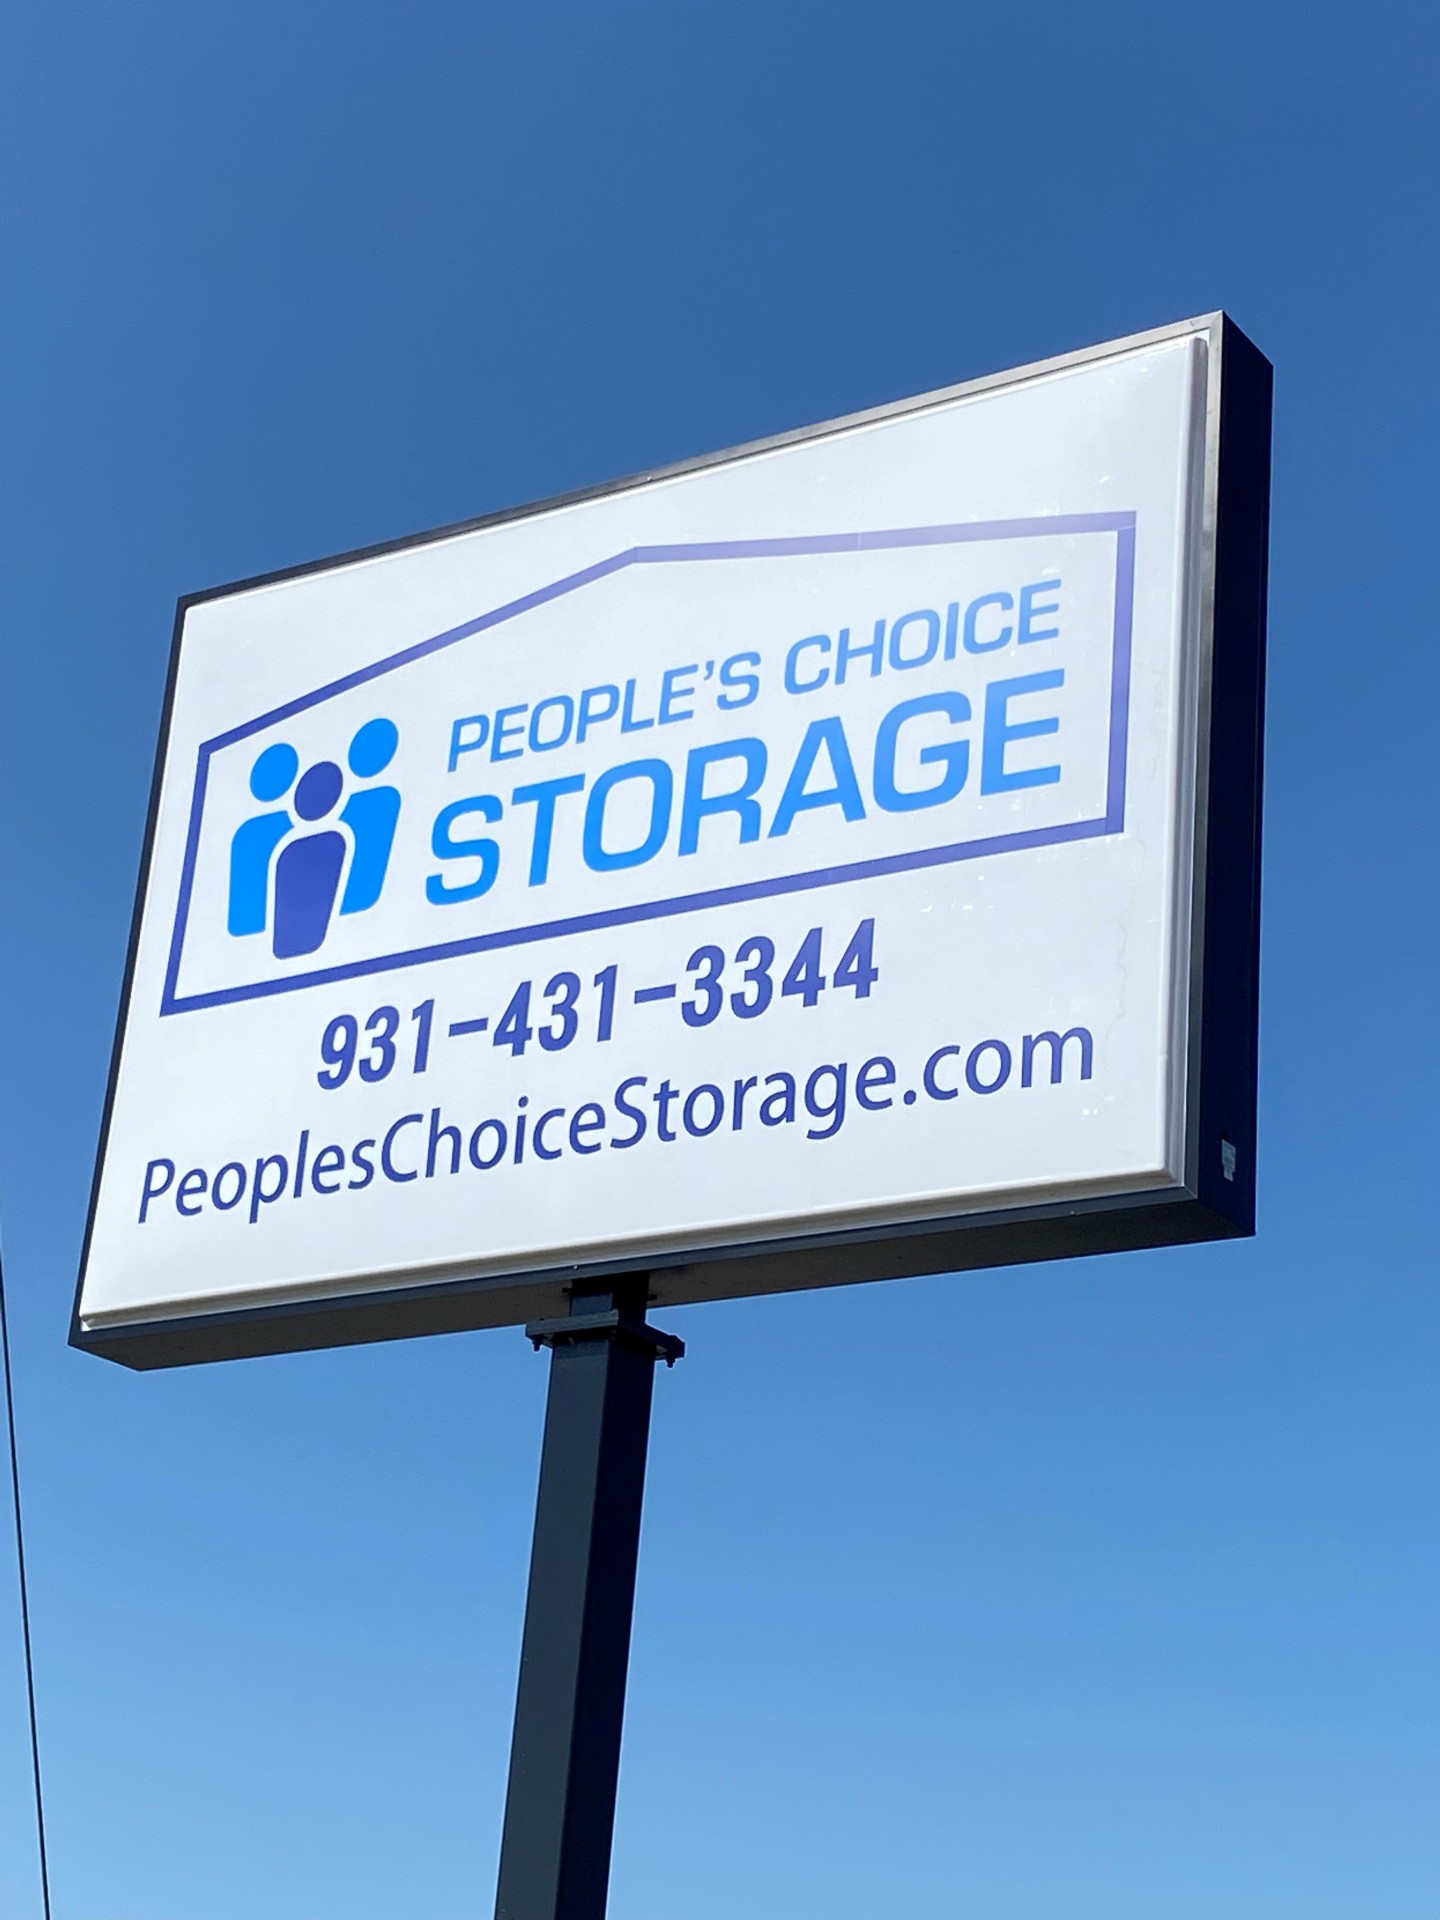 Peoples choice storage - clarksville